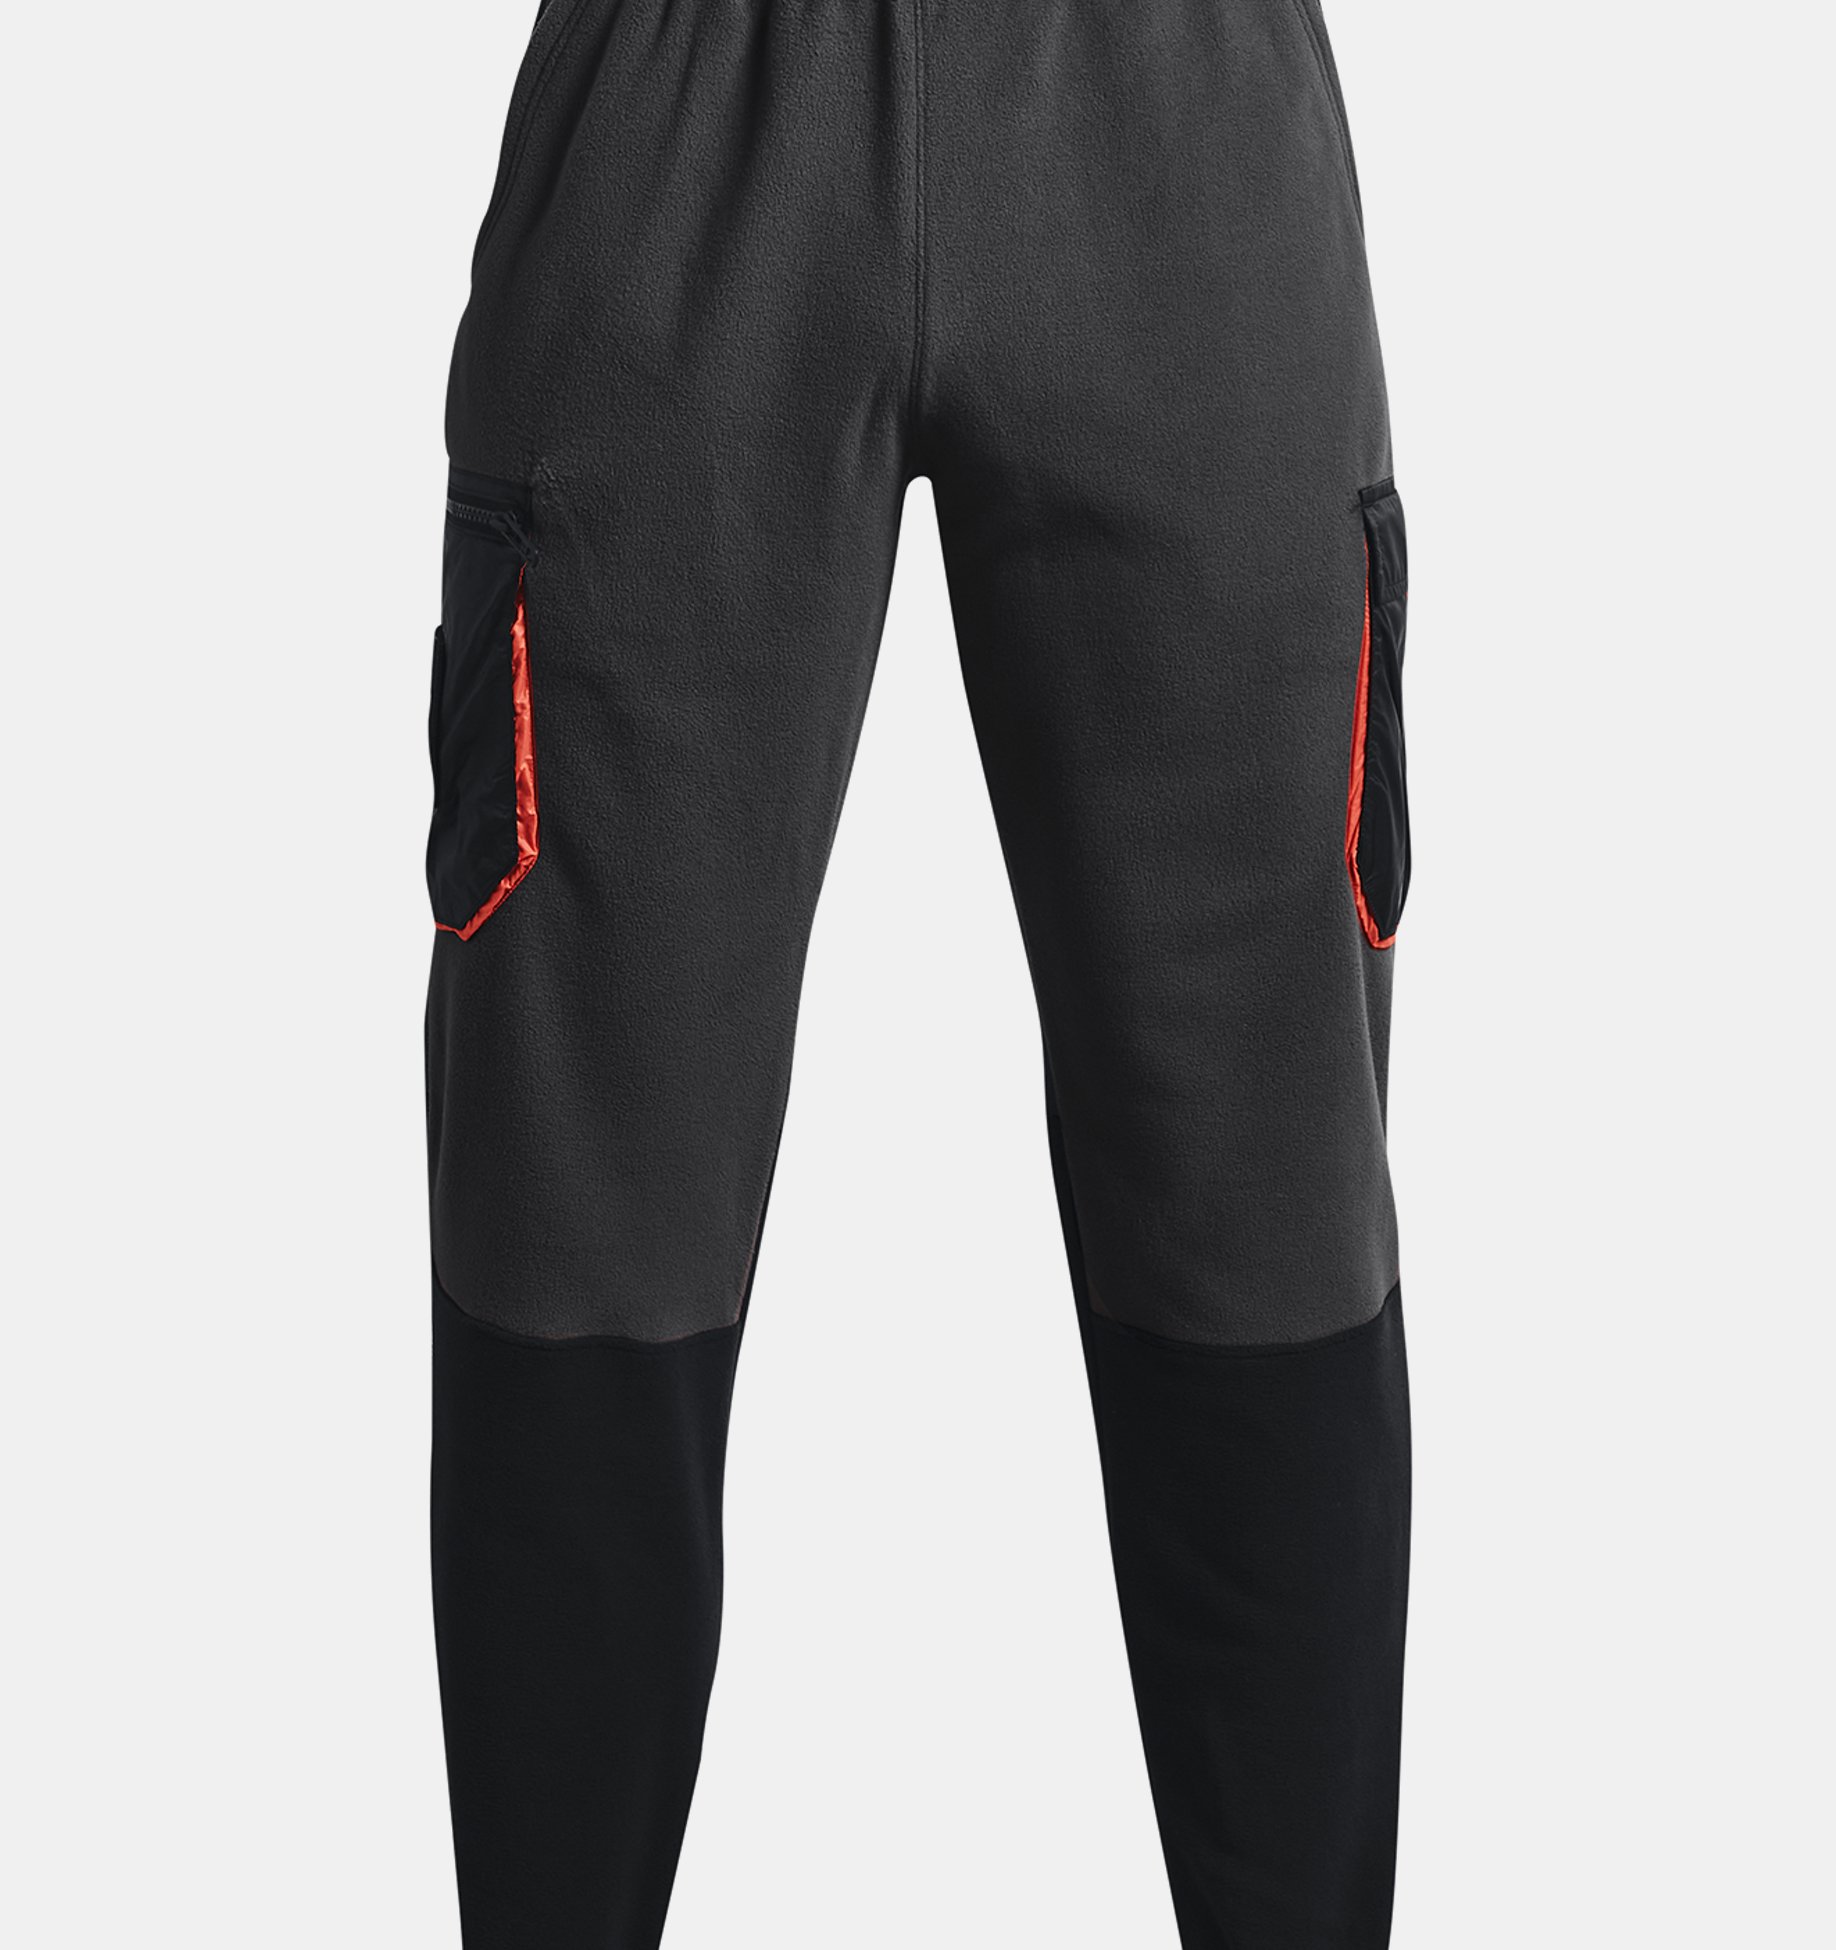 Men's AKHG Stone Run Standard Fit Fleece Lined Pants - IronPros